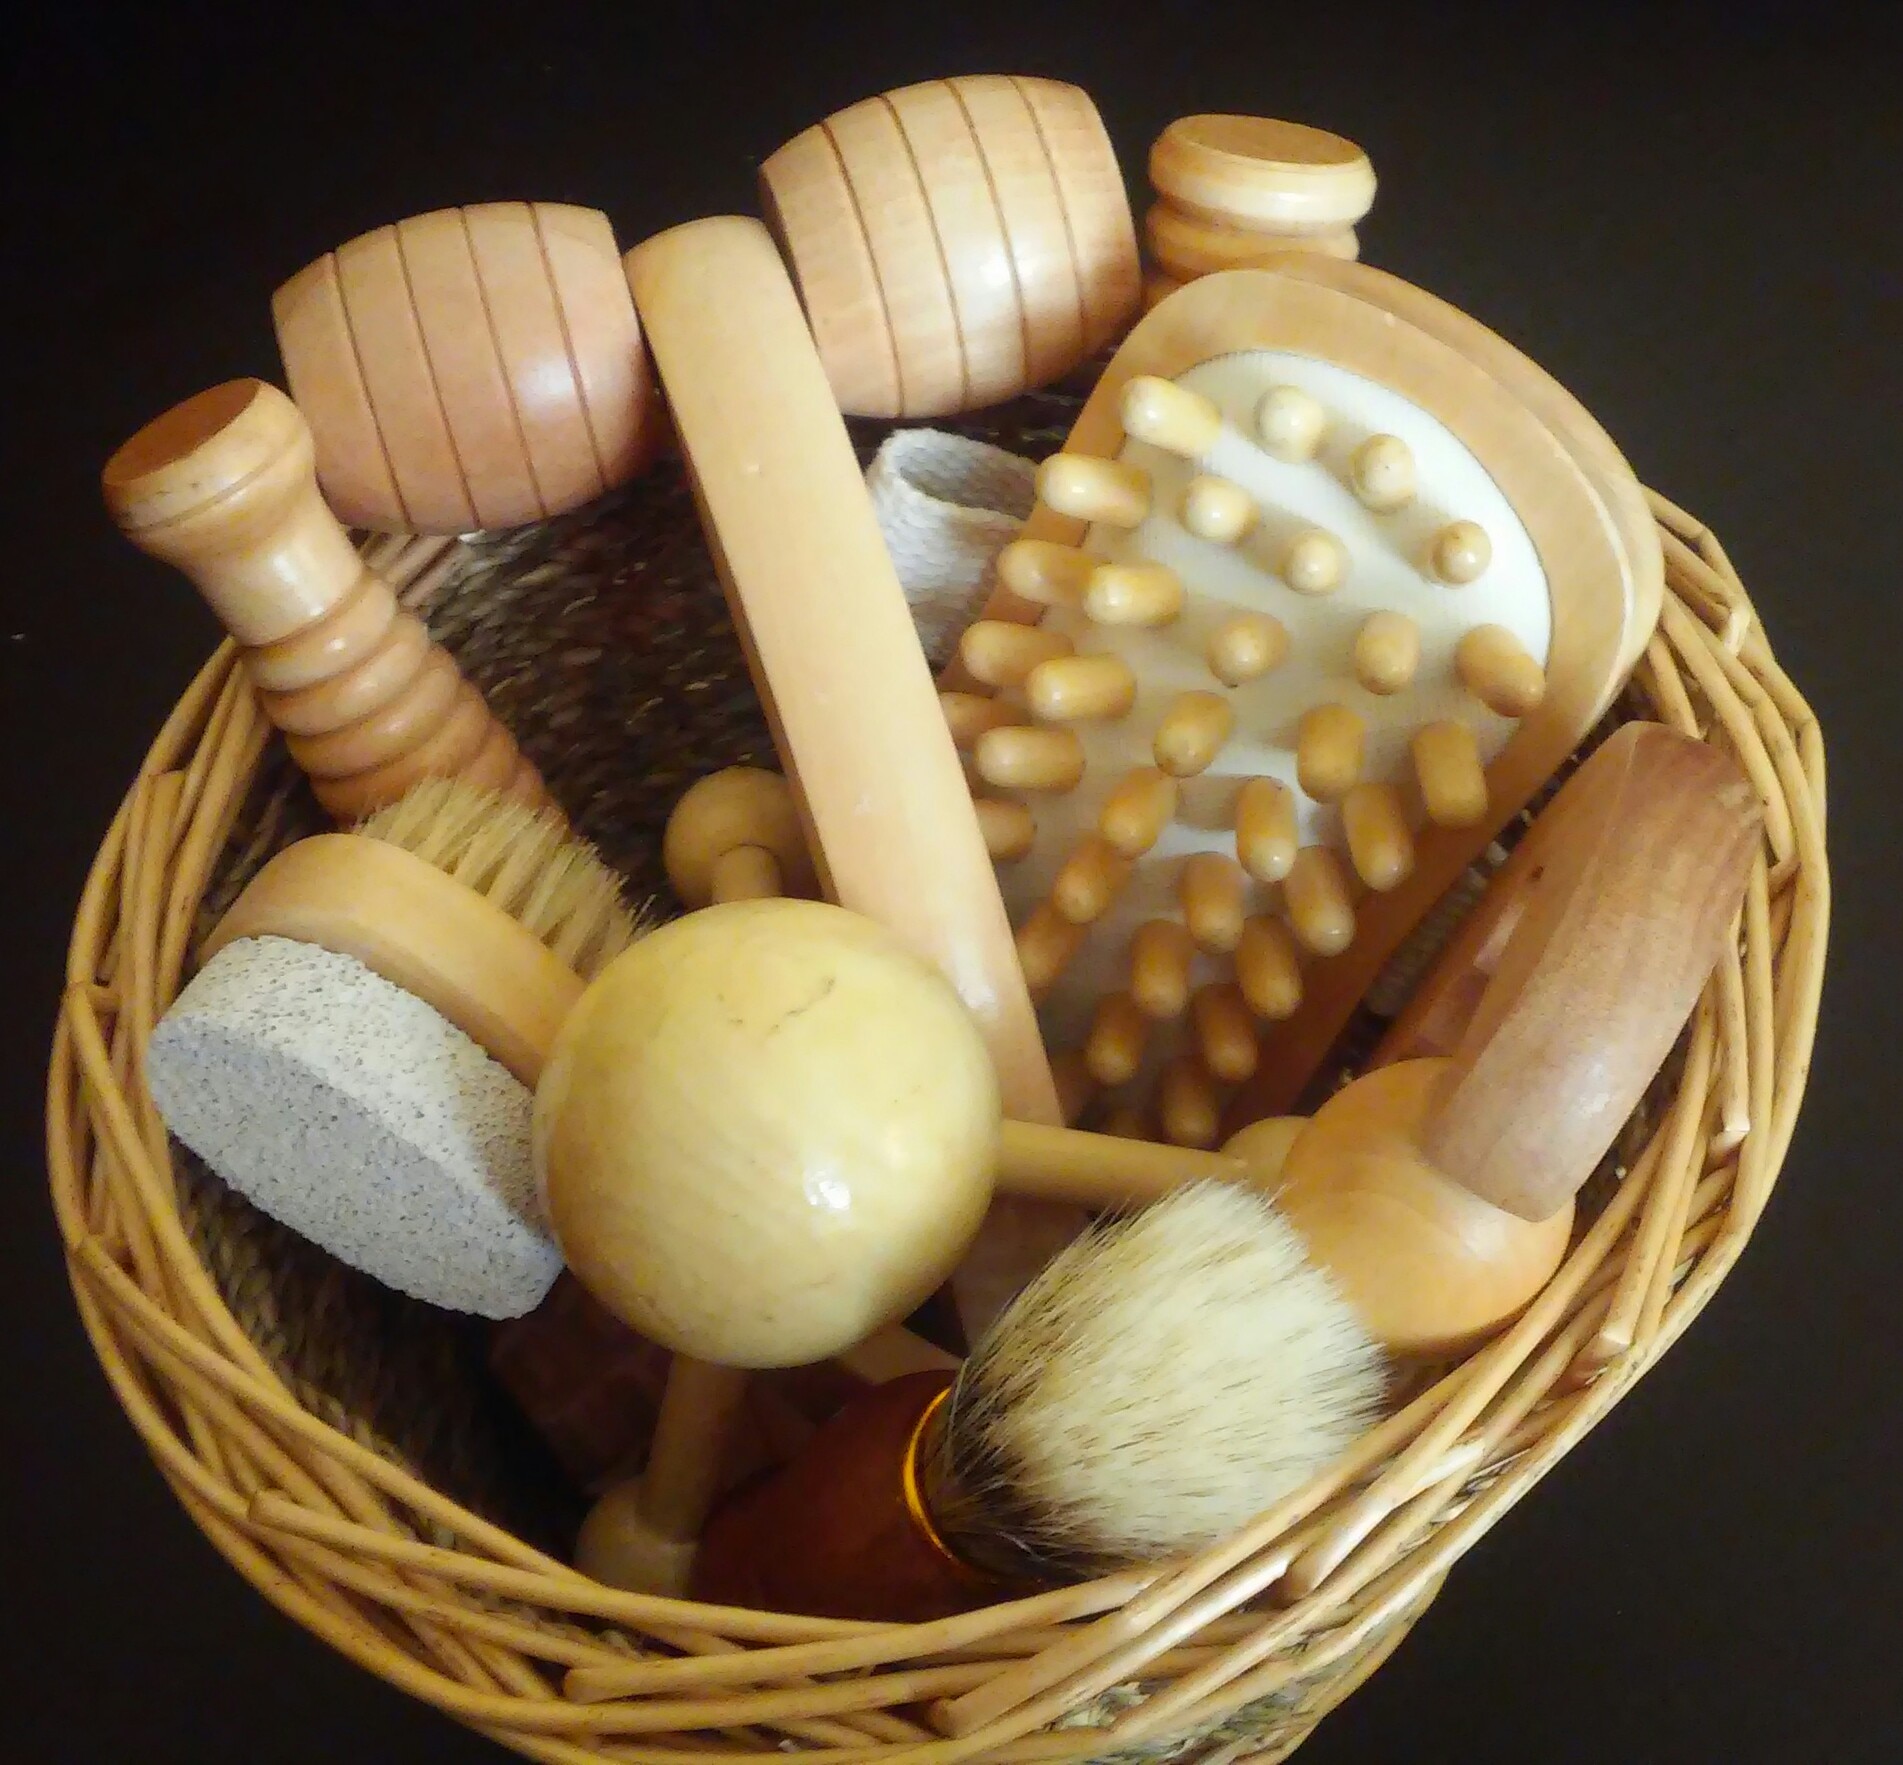 wooden massage tool on basket